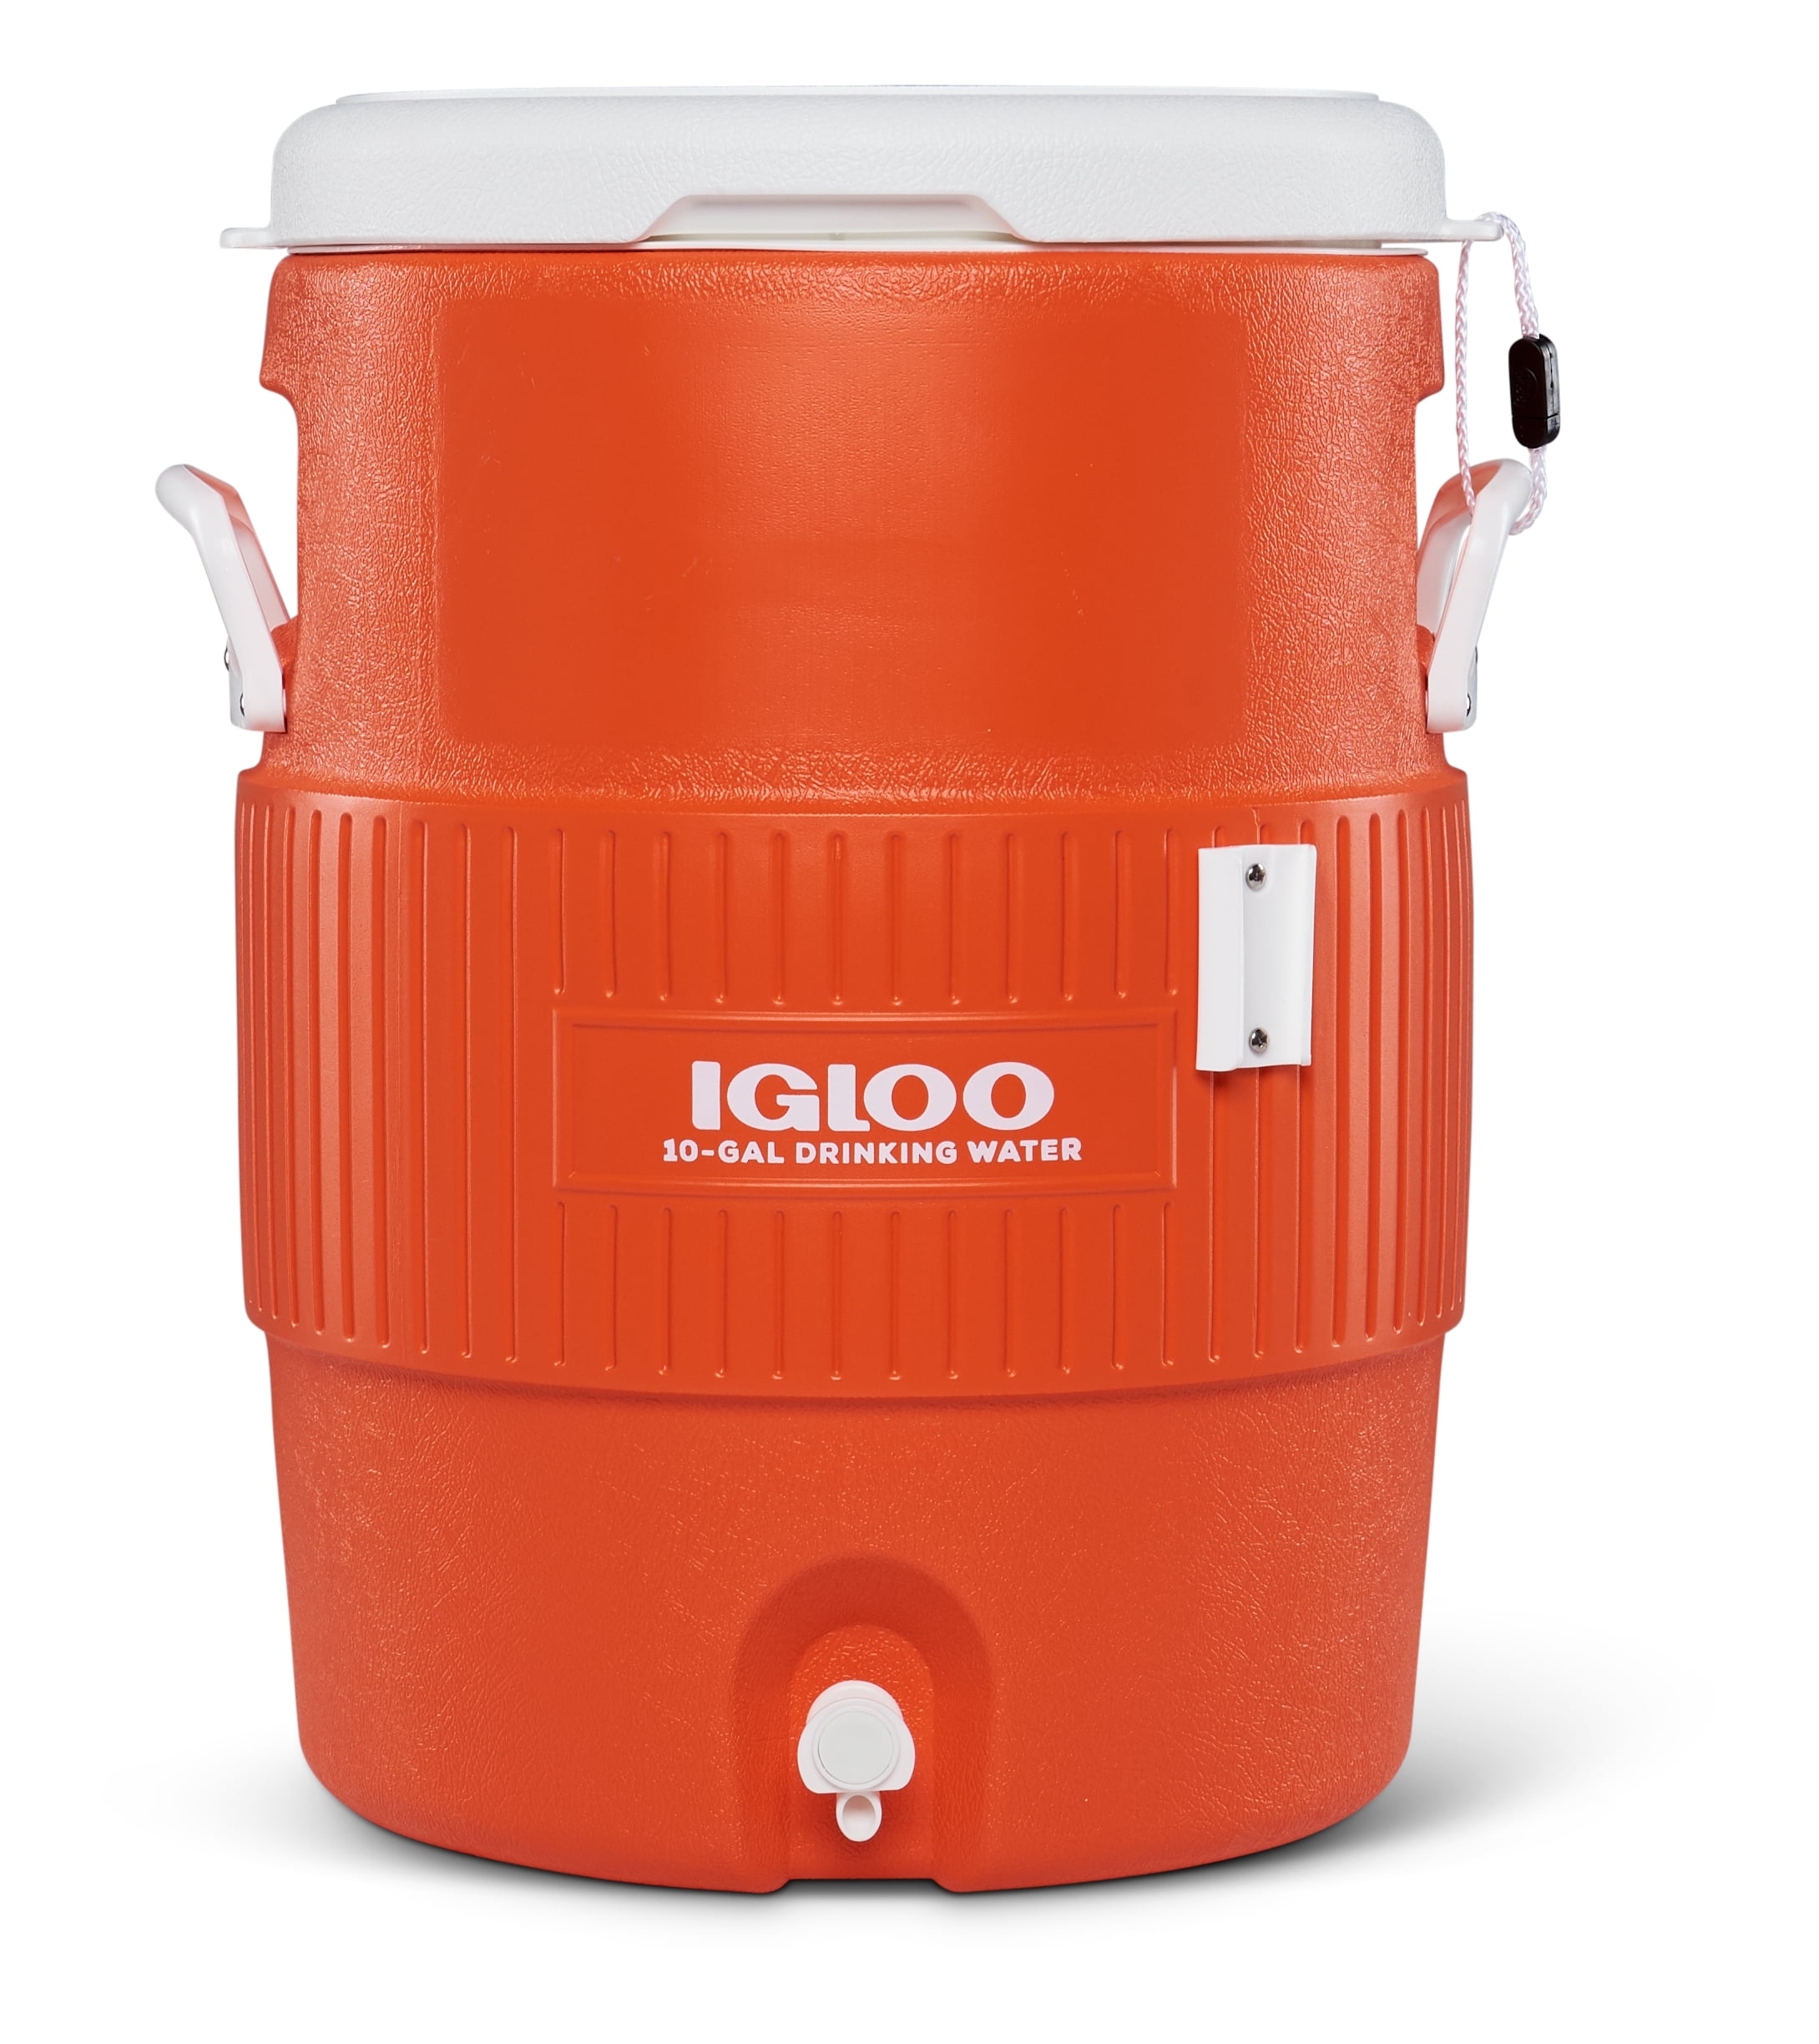 Igloo 5-Gallon Heavy-Duty Beverage Cooler - Orange - Walmart.com